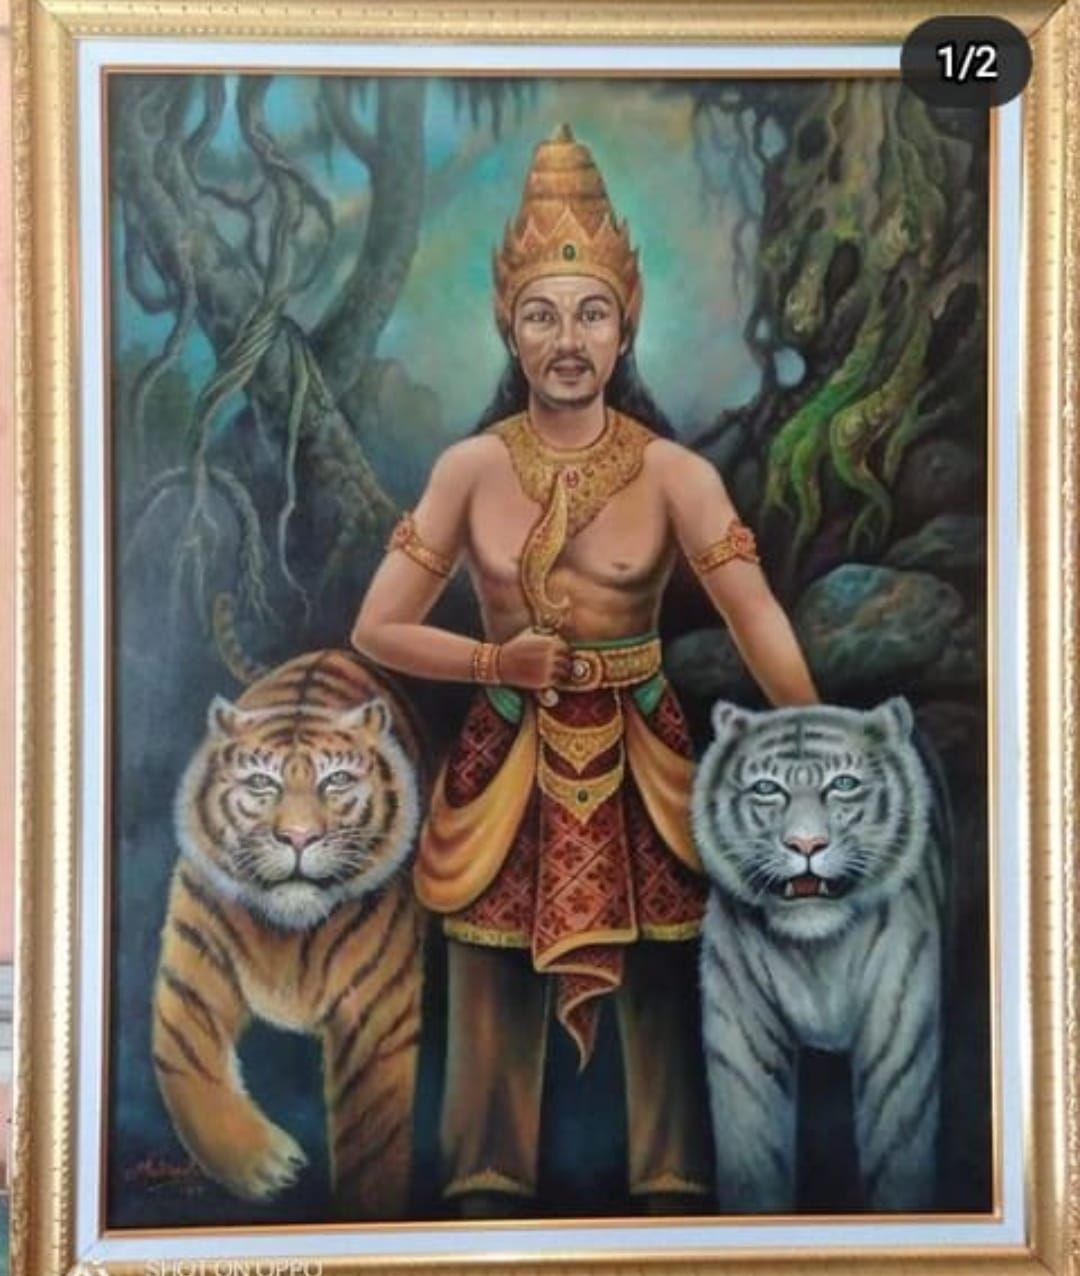 Legenda Tiga Pejuang Misterius di Tanah Jawa, Kisah Kekuatan dan Hilangnya Tanpa Jejak